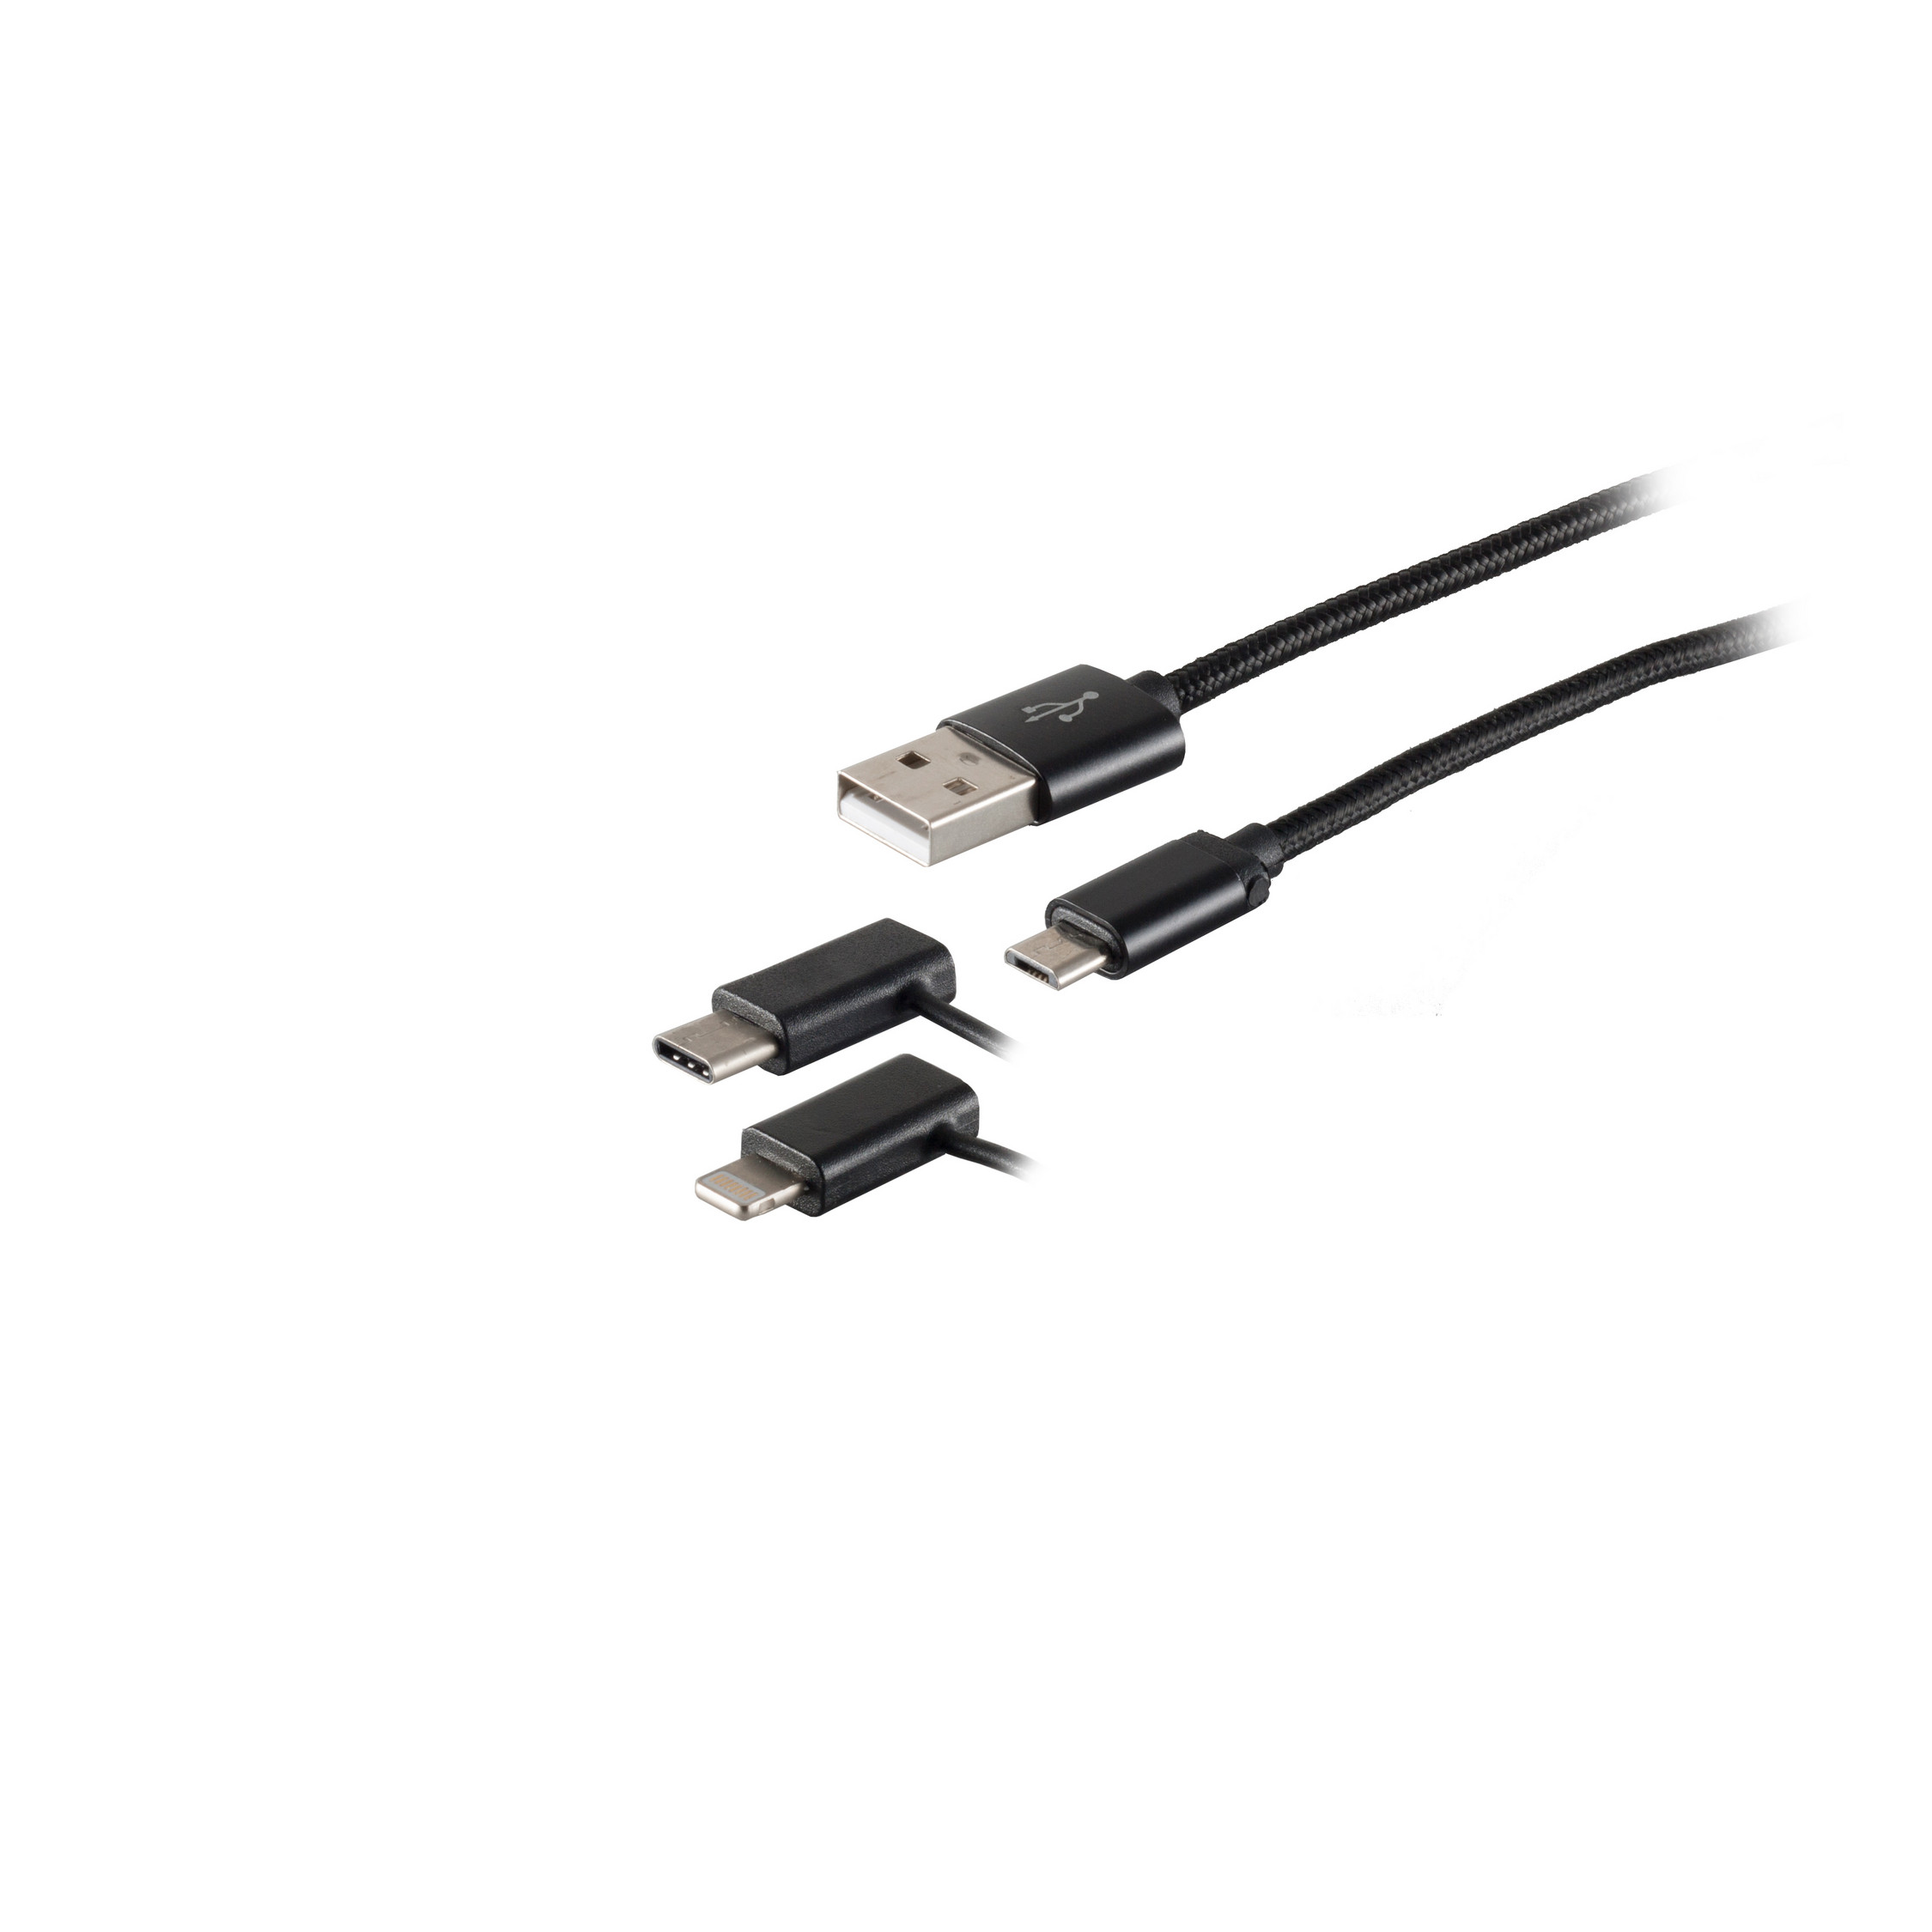 Stecker Ladekabel 1m MAXIMUM Typ CONNECTIVITY S/CONN 8-pin Kabel C/ USB MicroB/ 3in1